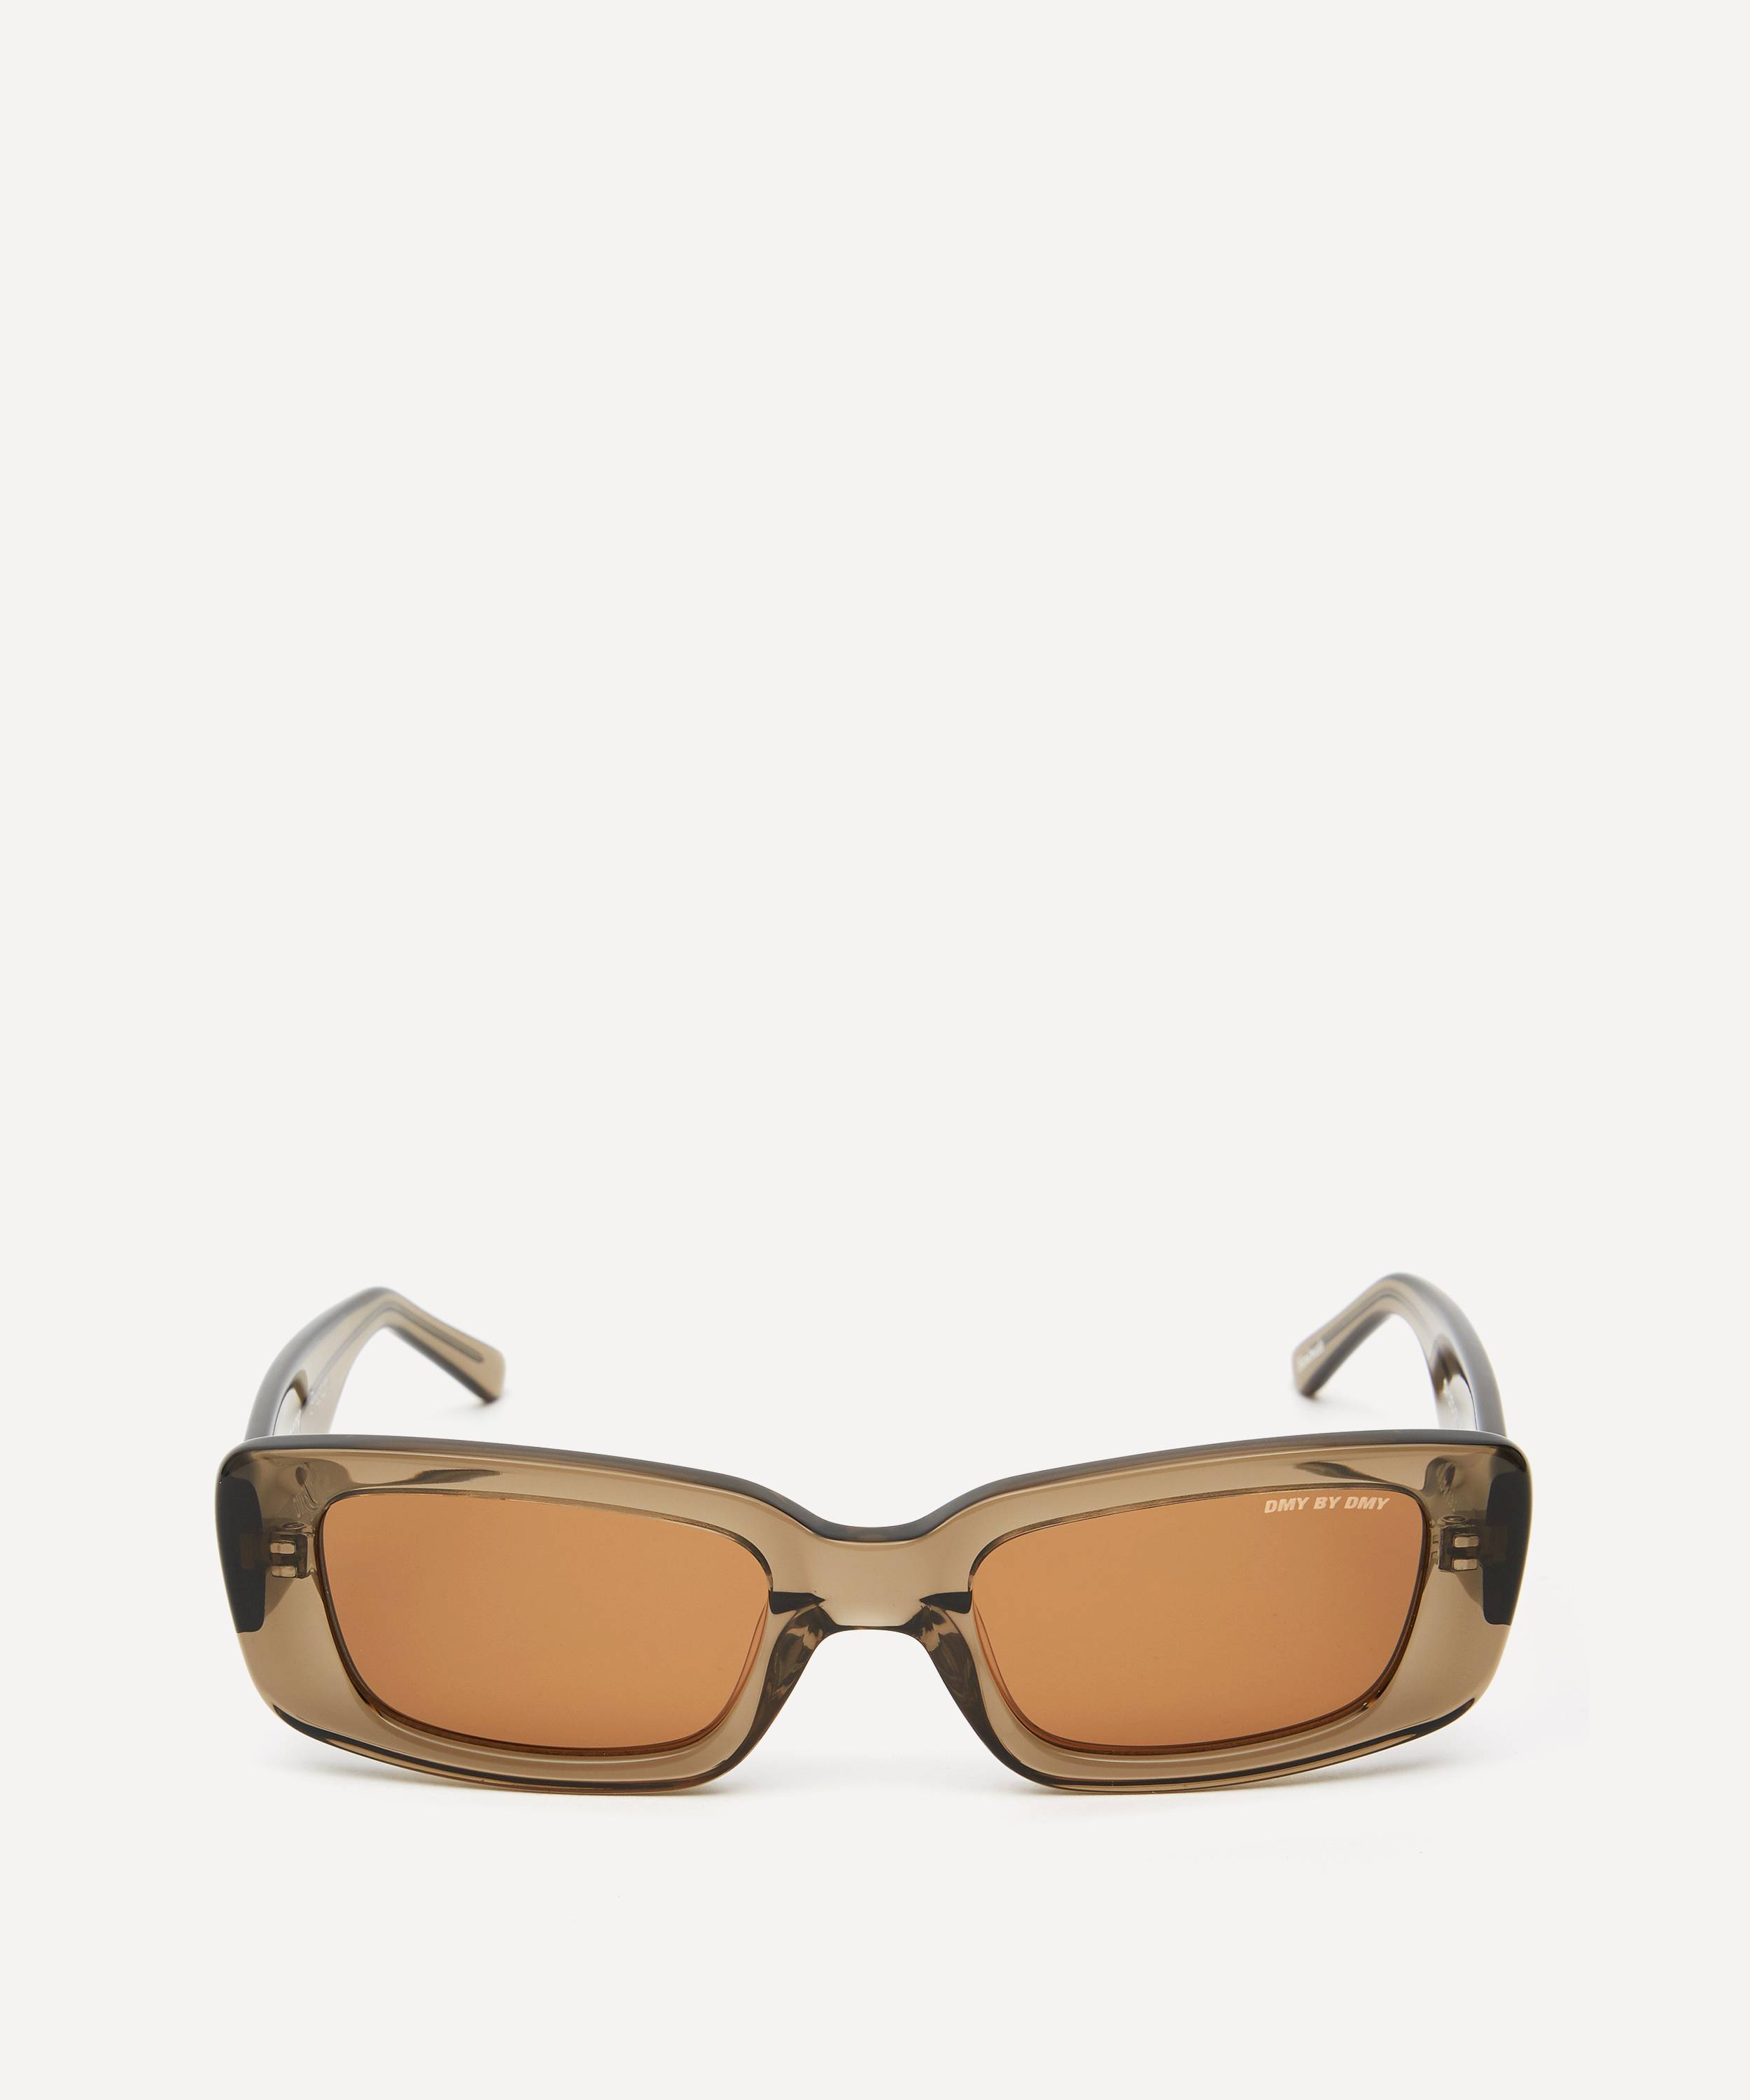 DMY BY DMY Preston Rectangular Sunglasses | Liberty